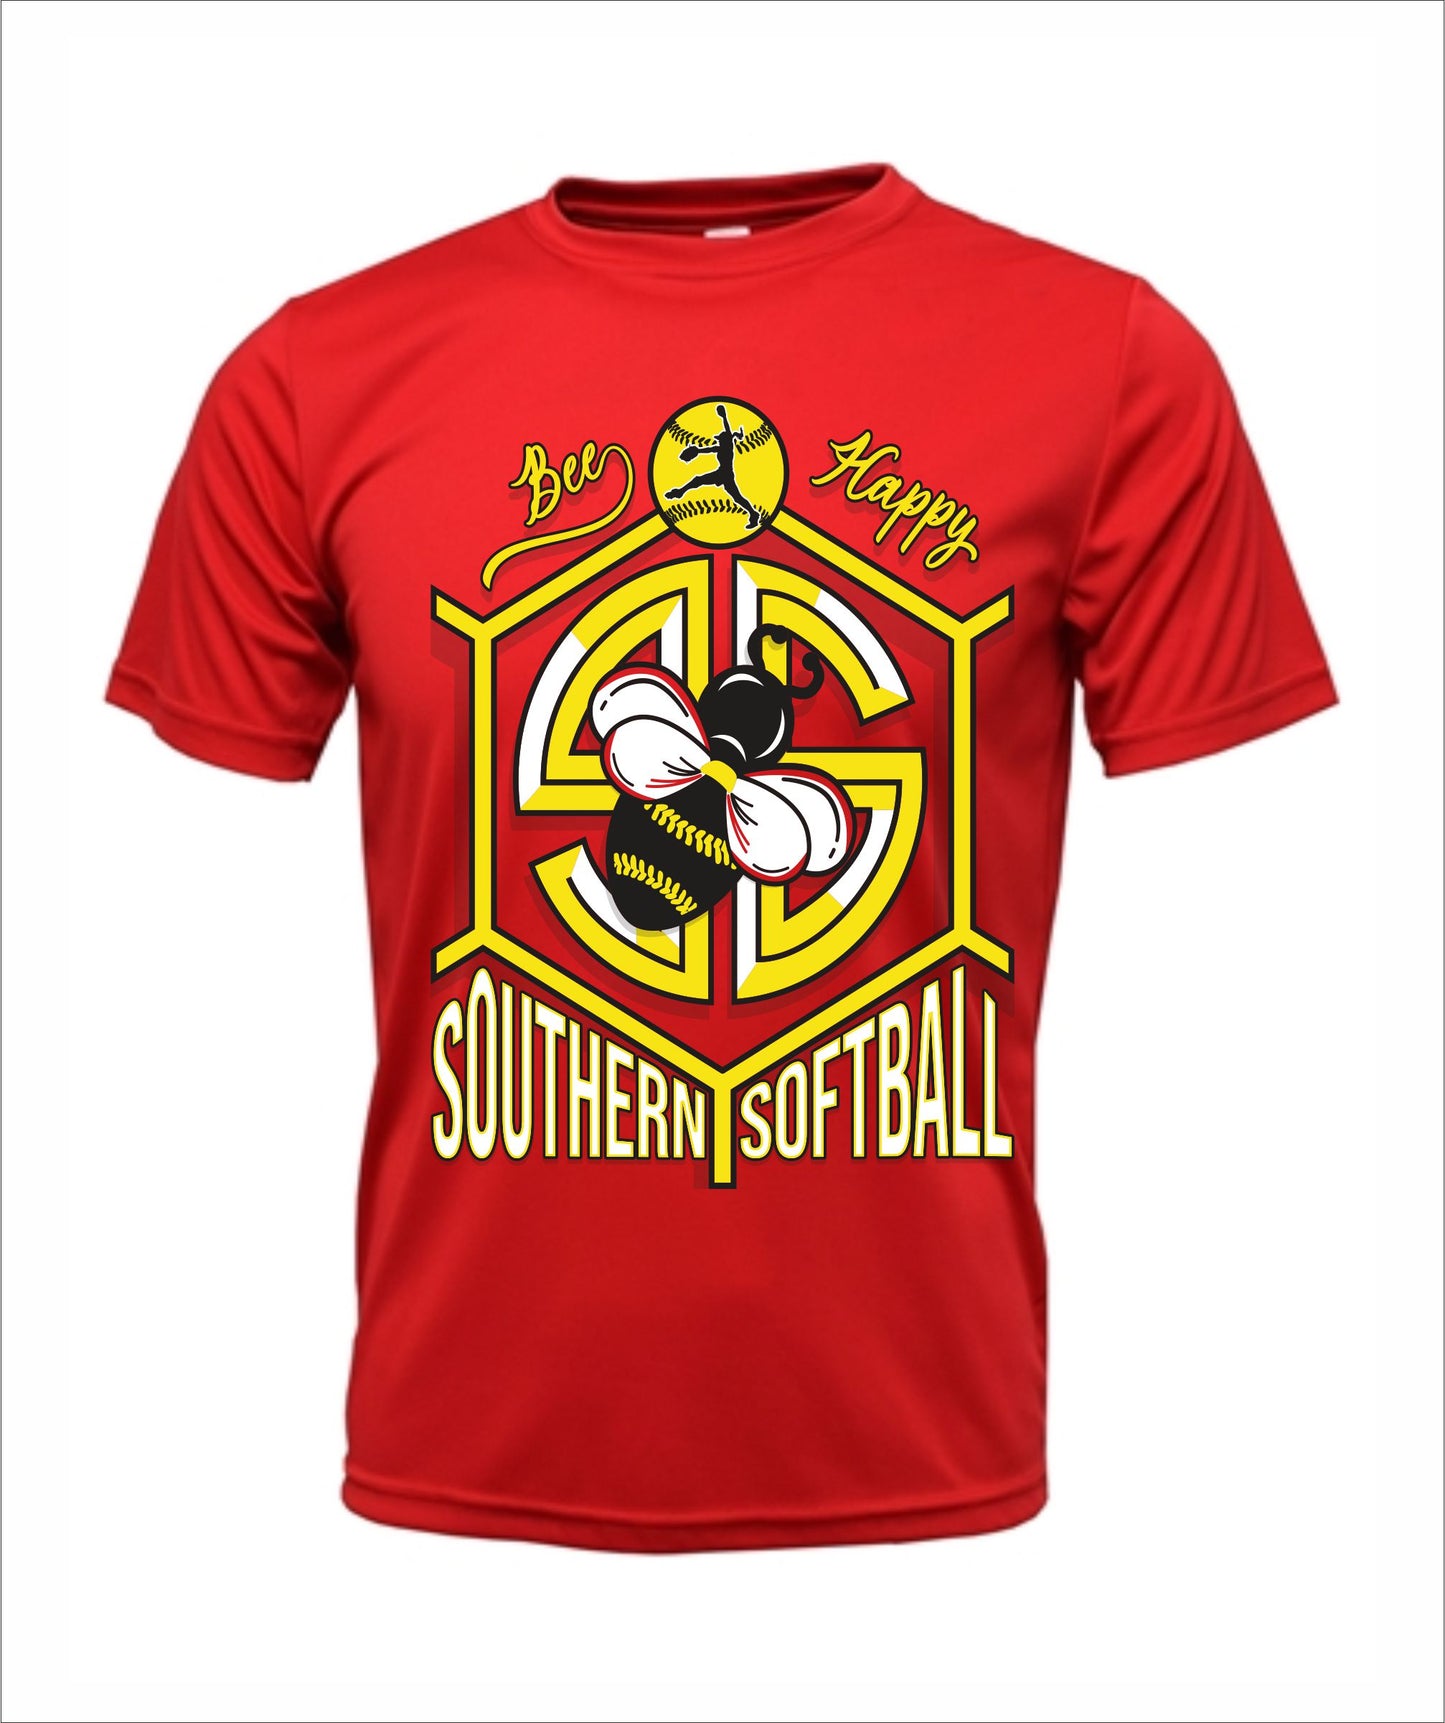 Softball "Bee Happy" Cotton T-Shirt